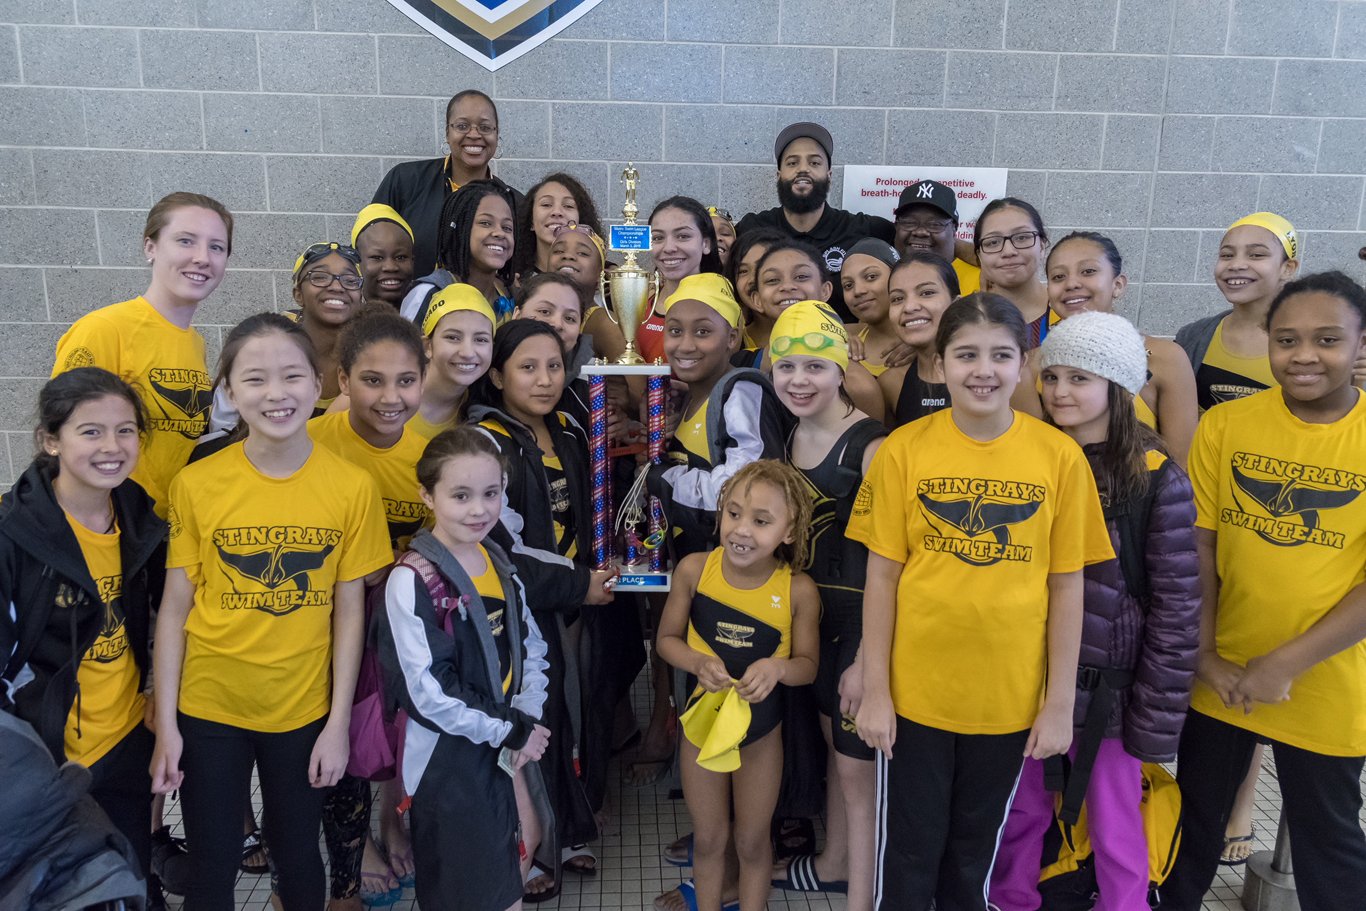 2018 Milbank Stingrays Swim Team wins league championships